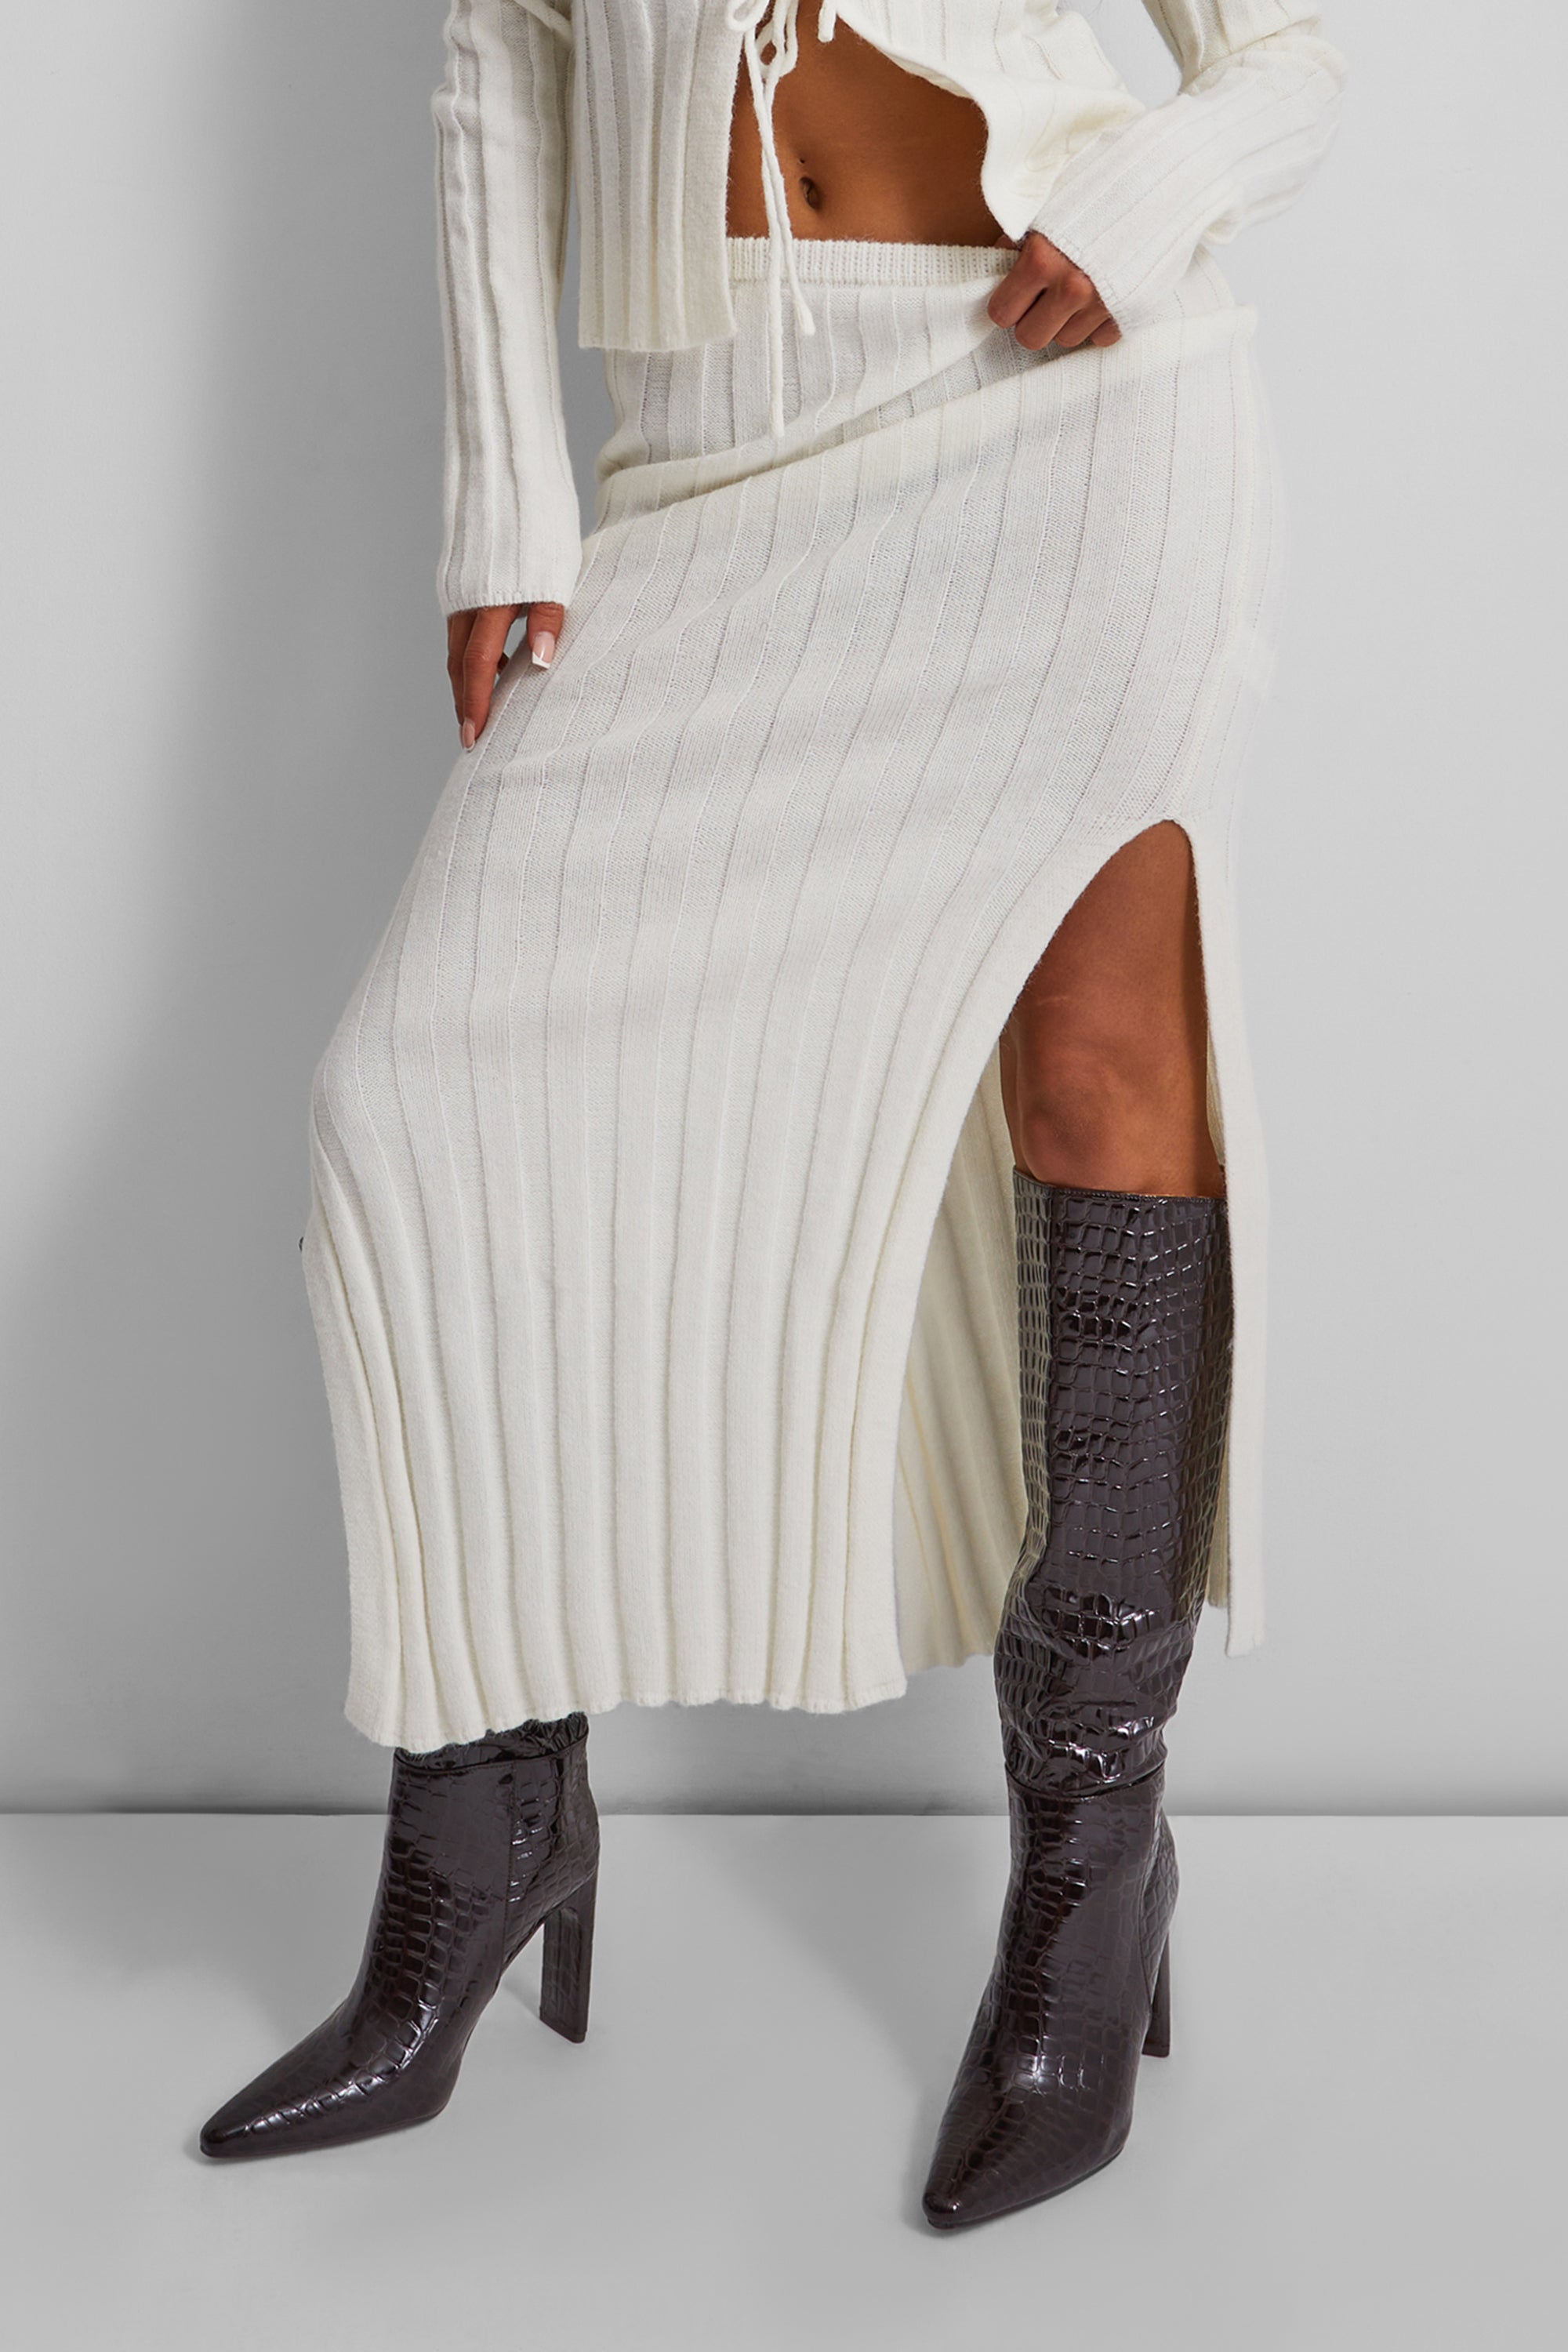 Kaiia Knitted Maxi Skirt in Cream